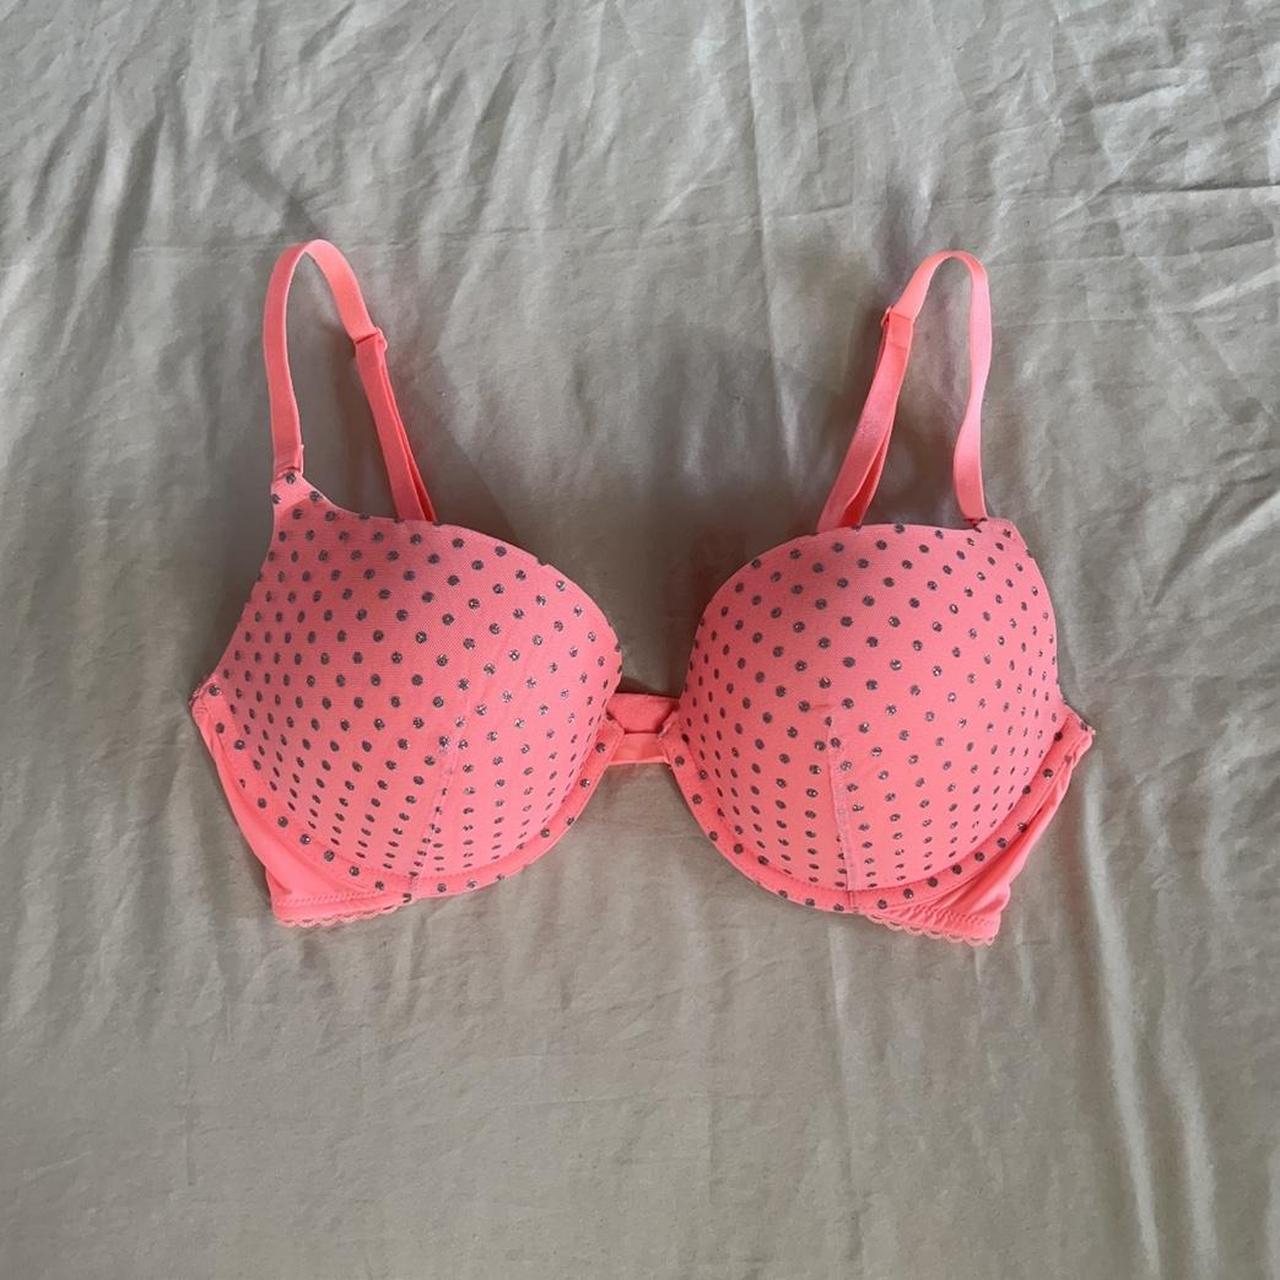 Victorias secret the perfect shape blush pink bra - Depop